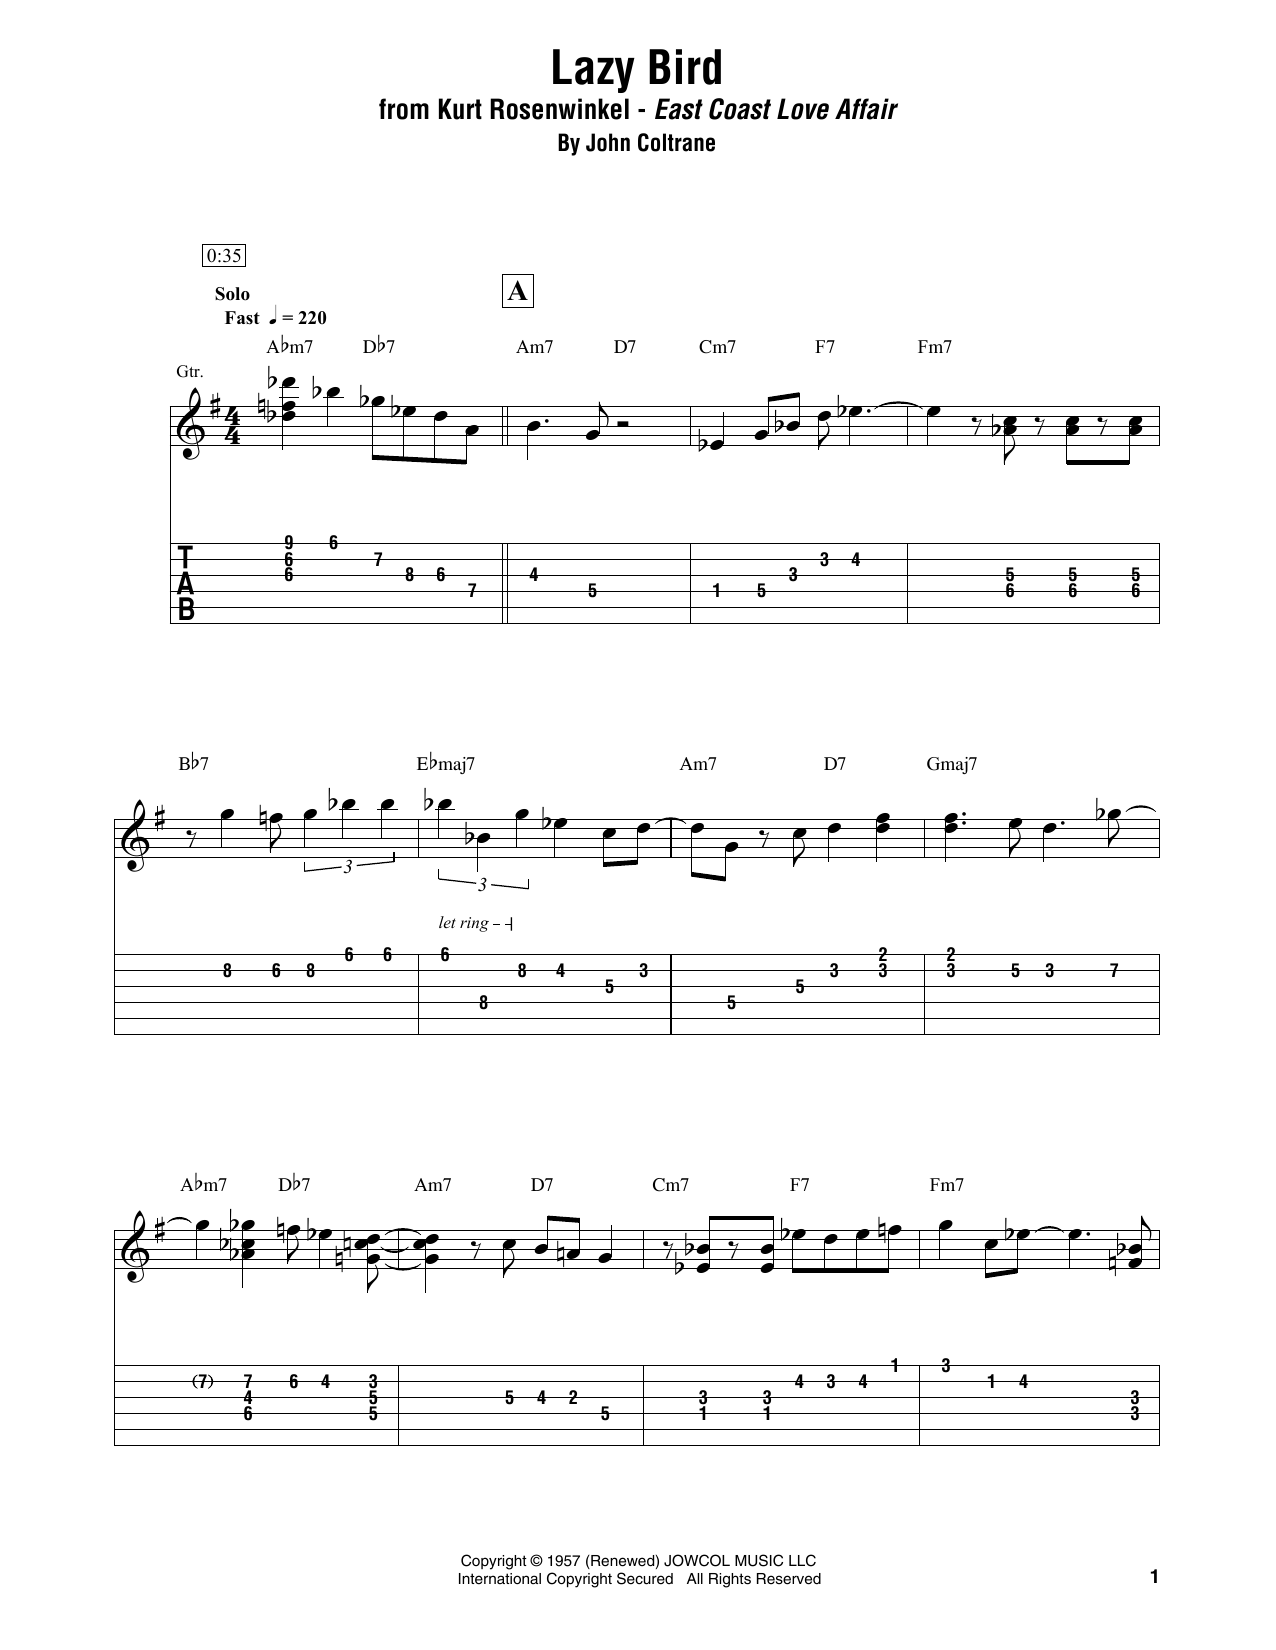 Kurt Rosenwinkel Lazy Bird sheet music notes printable PDF score